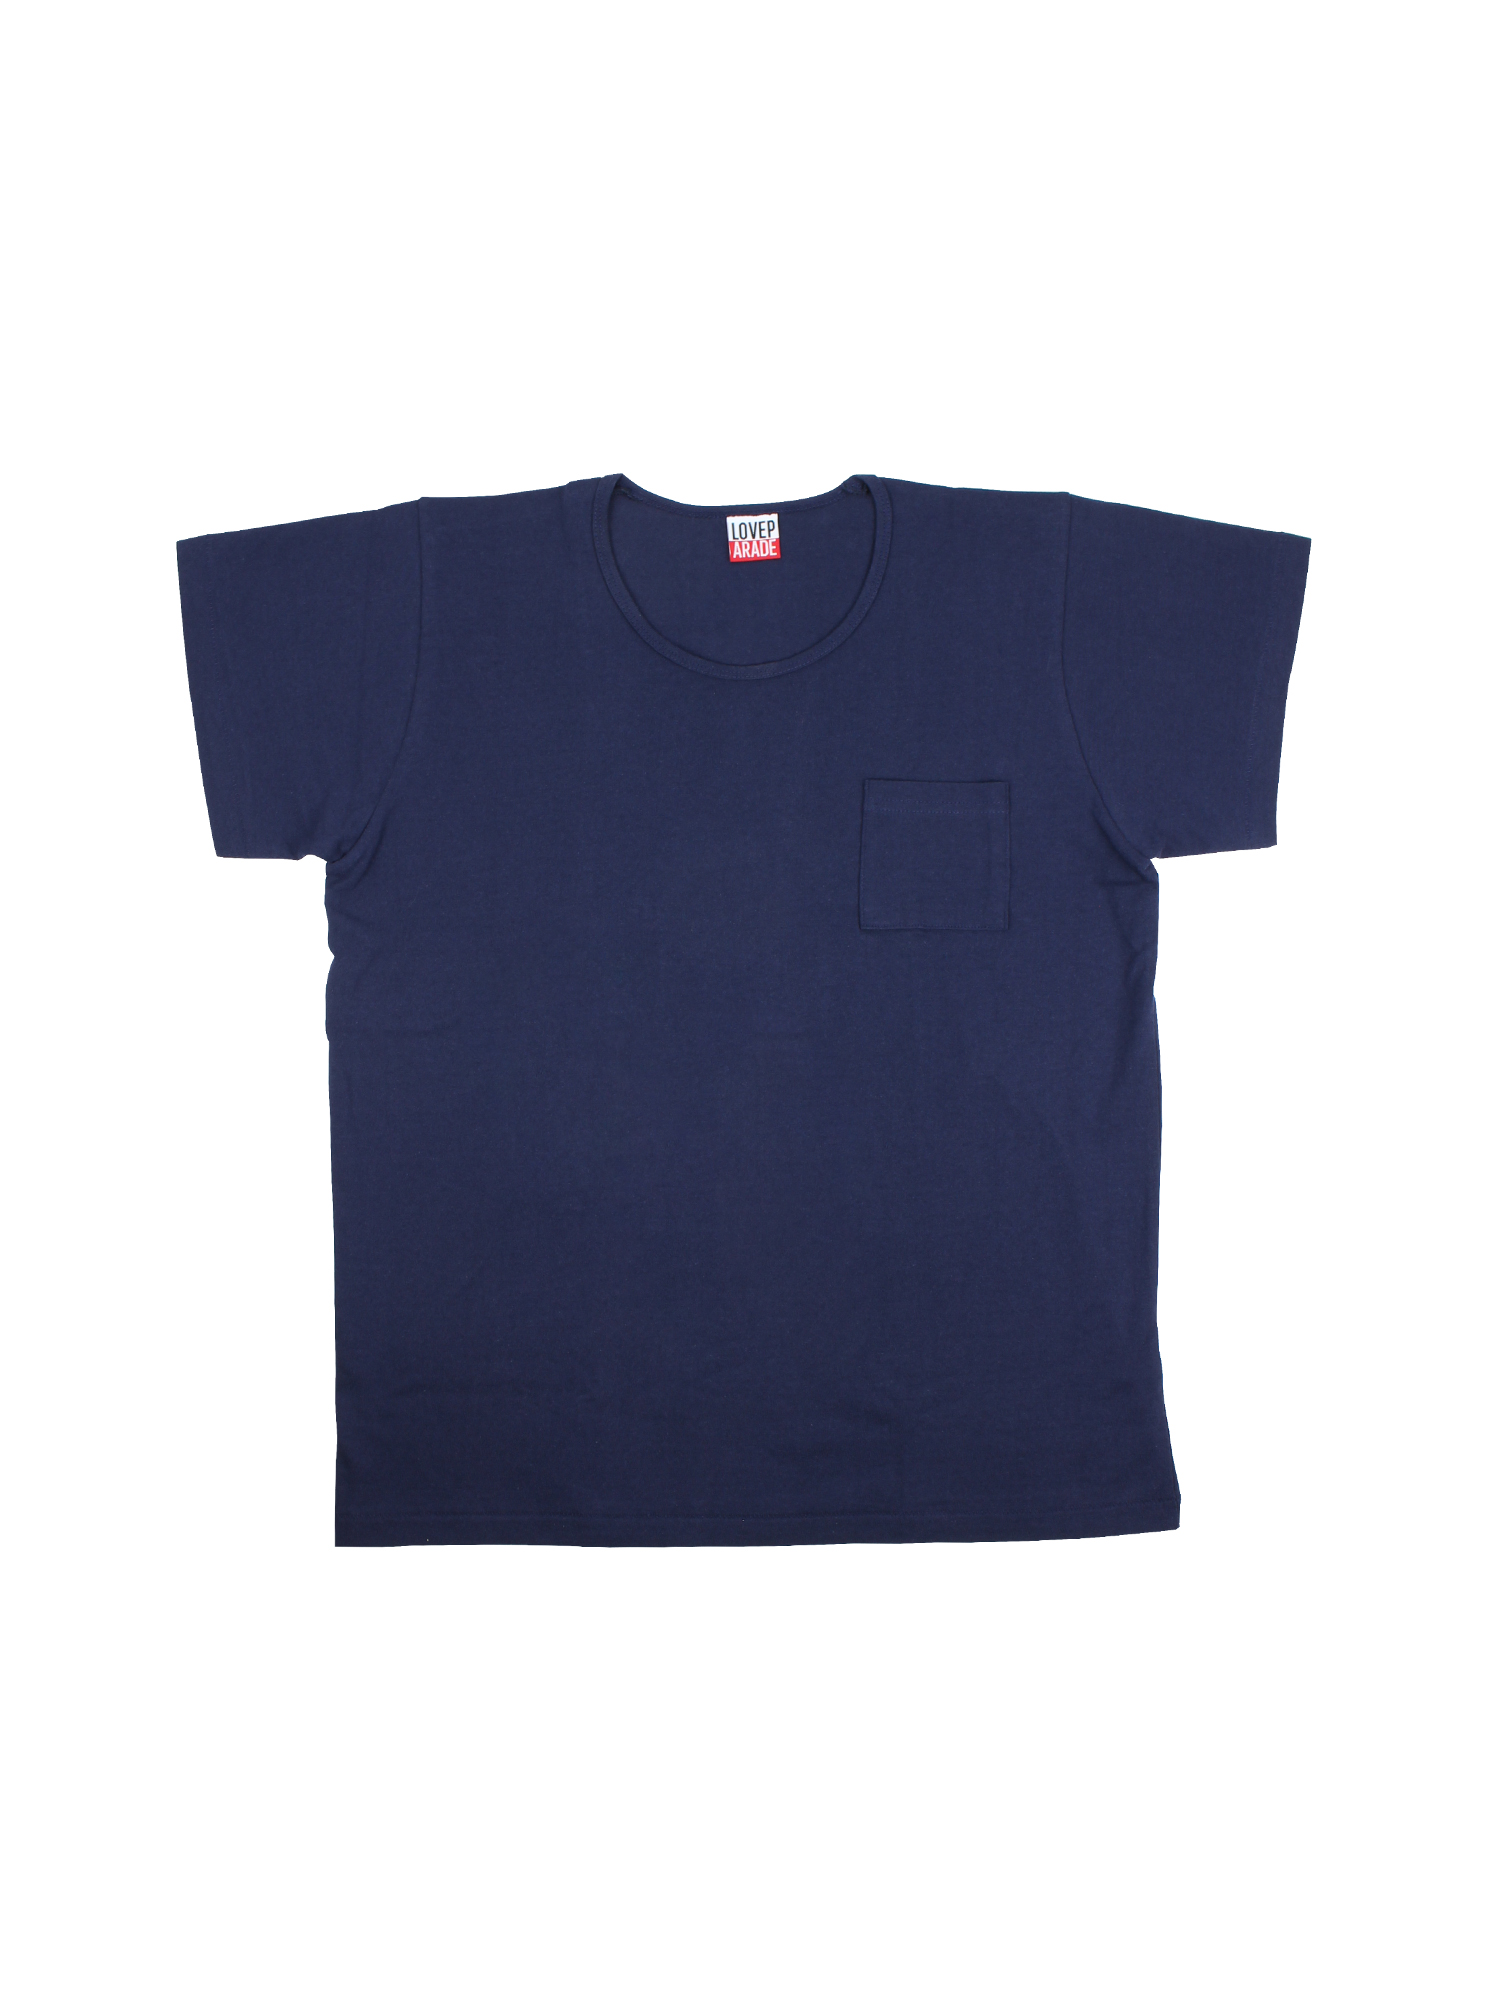 Pocket T-Shirt (LOVE PARADE Merch) - Navy